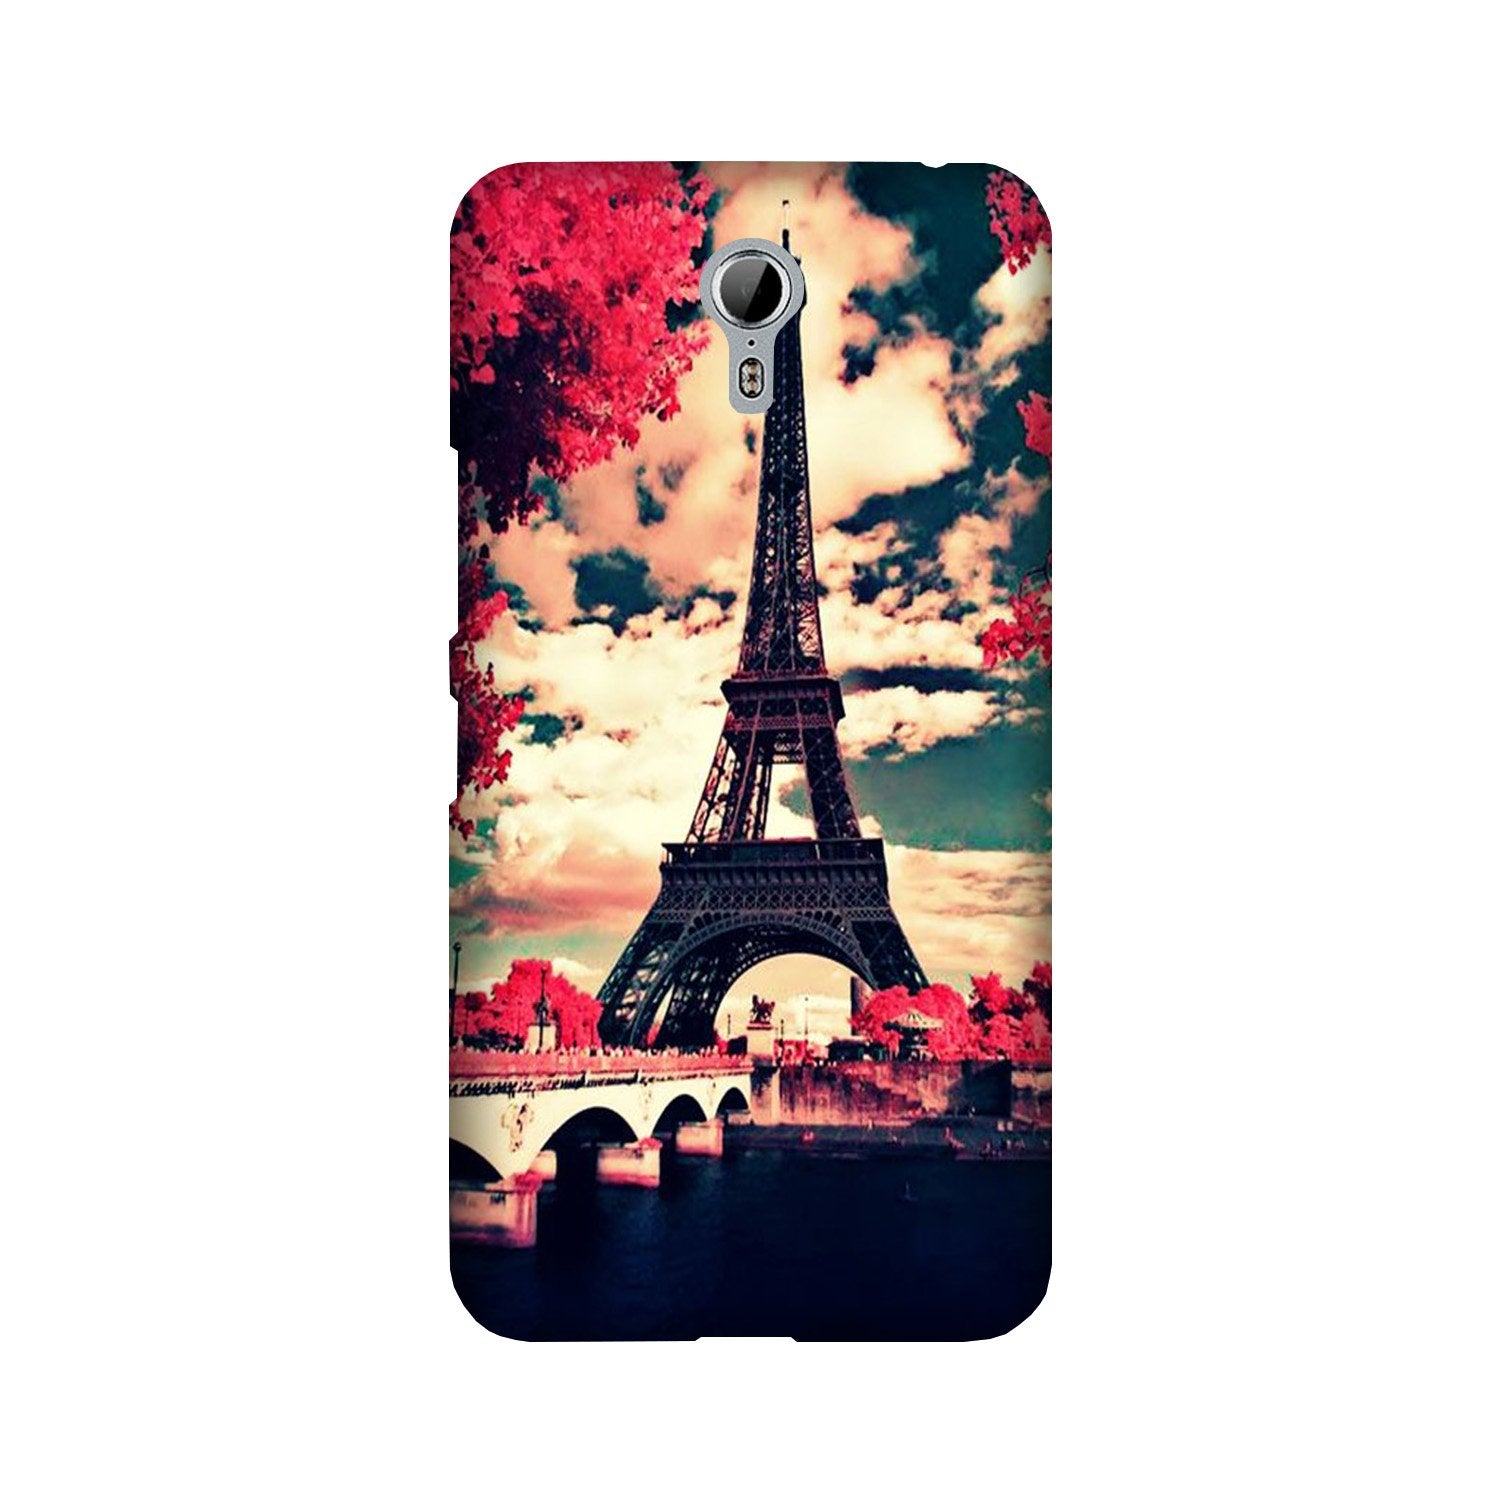 Eiffel Tower Case for Lenovo Zuk Z1 (Design No. 212)